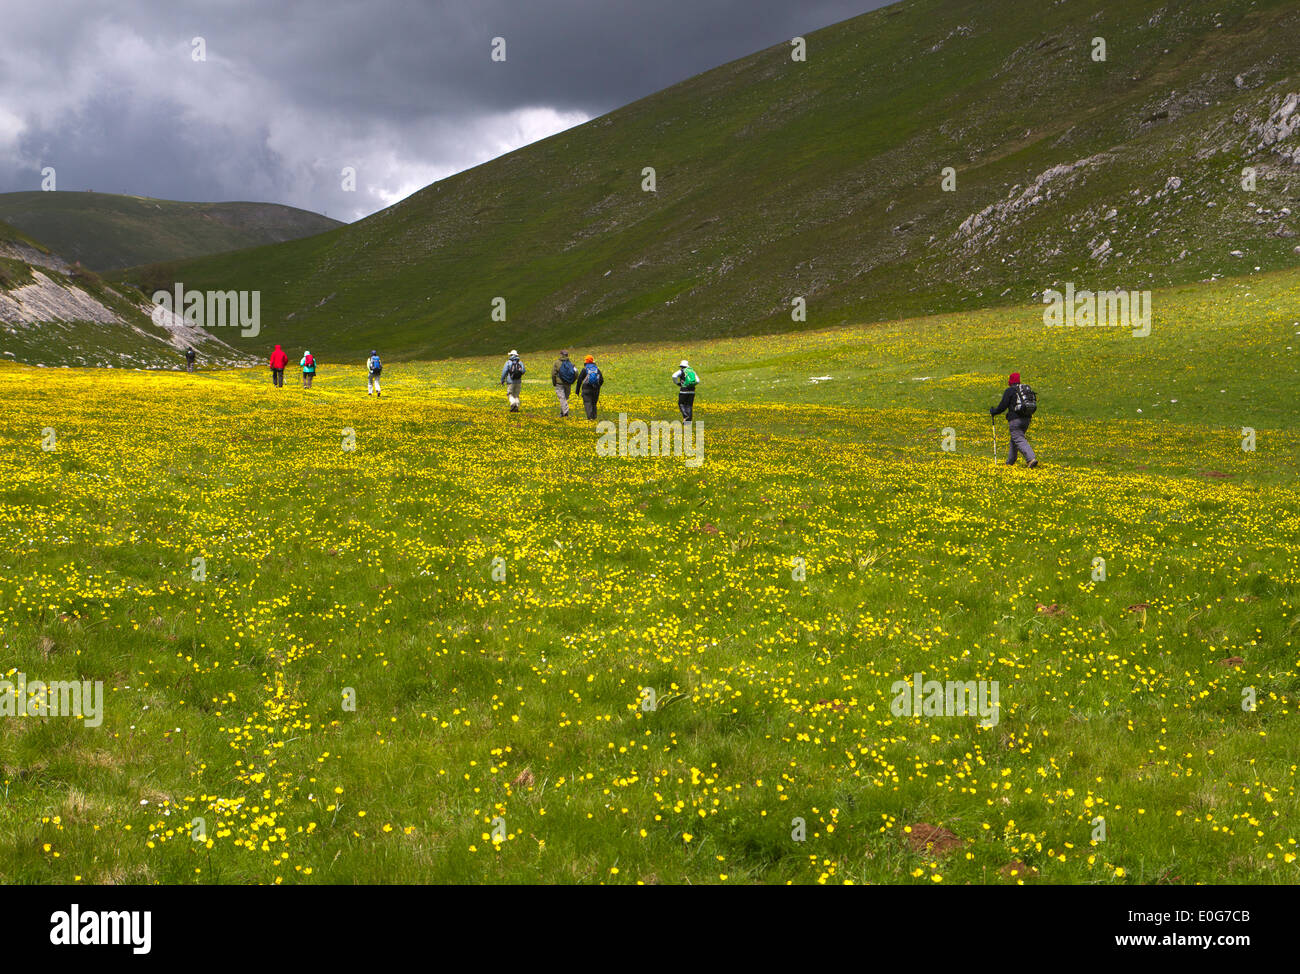 Hiking on Campo Imperatore, Italy's largest alpine plain Stock Photo